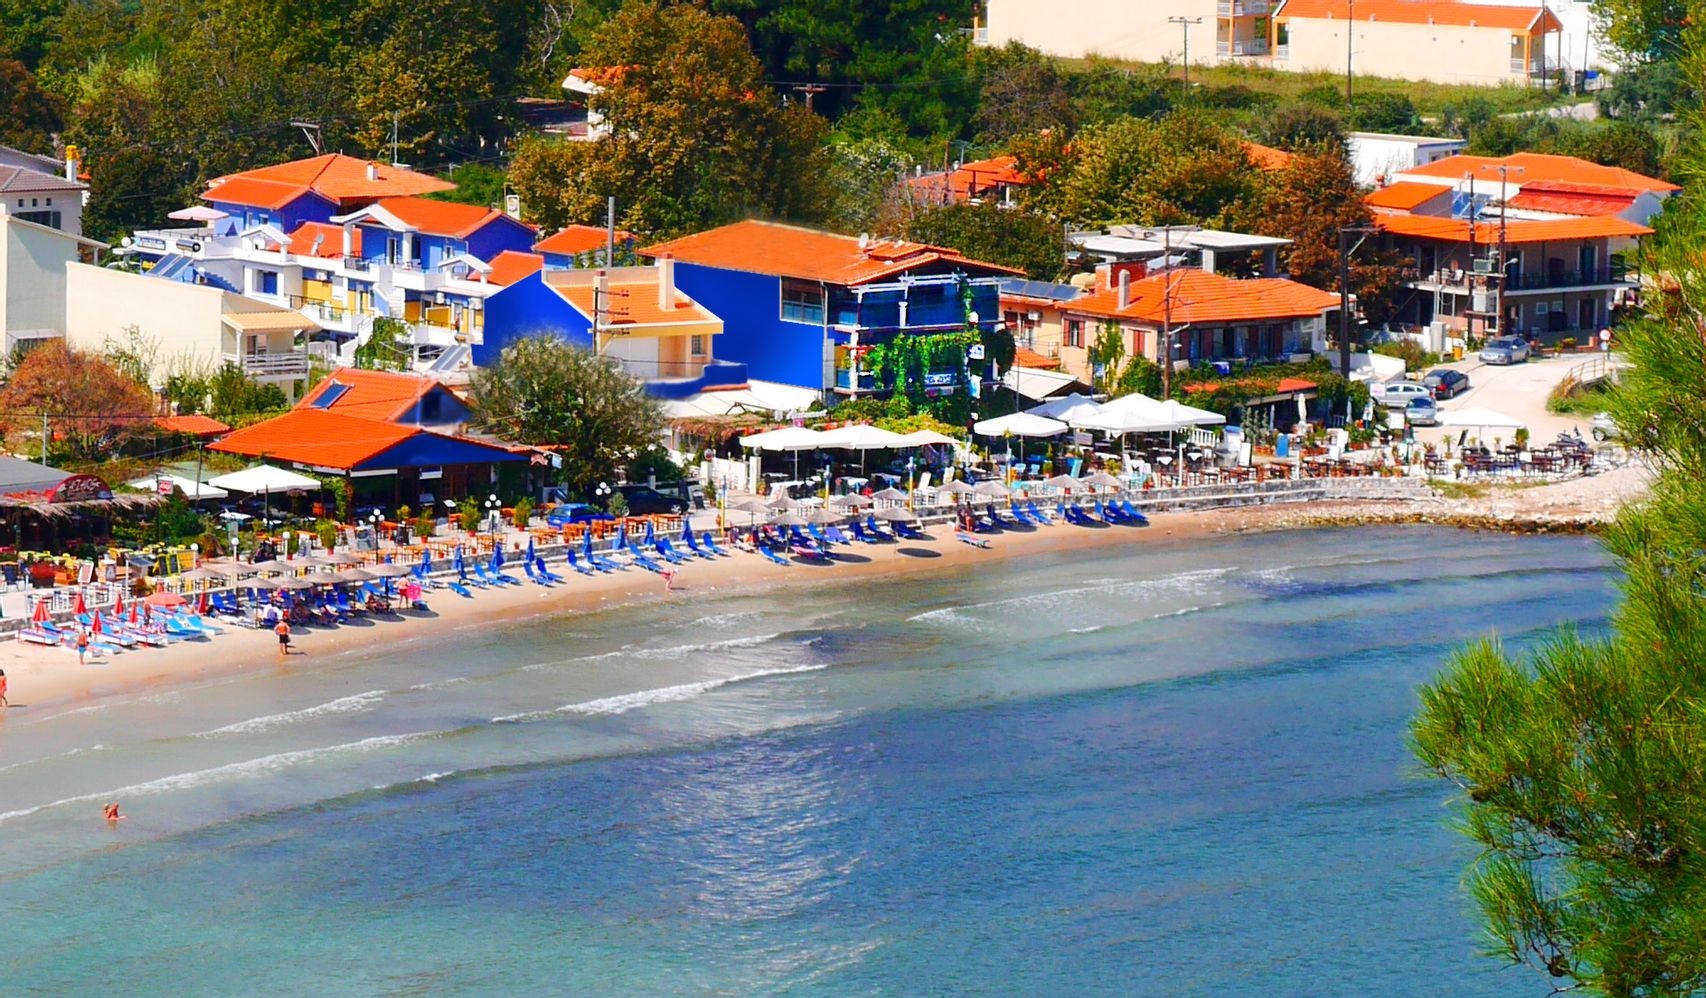 Blue Sea Beach Resort - Θάσος ✦ 2 Ημέρες (1 Διανυκτέρευση) ✦ 2 άτομα ✦ 1 ✦ 16/05/2022 έως 30/09/2022 ✦ Μπροστά στην παραλία!